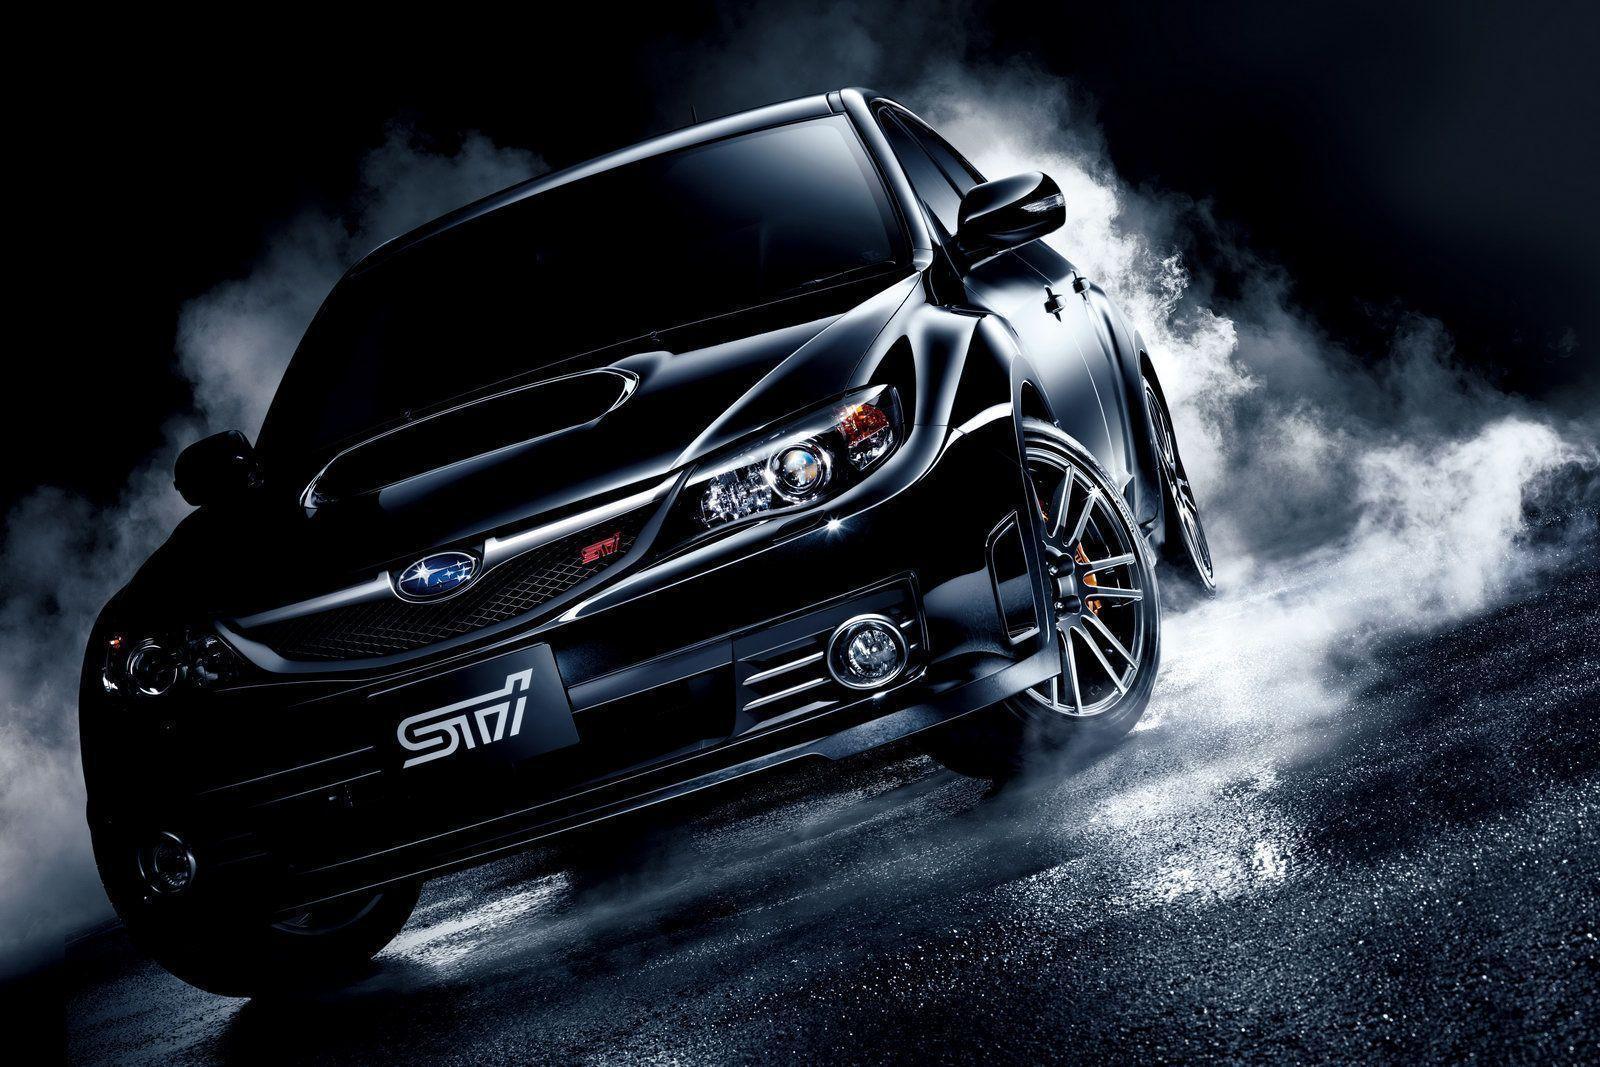 All &;bout Cars: Subaru Impreza WRX STI